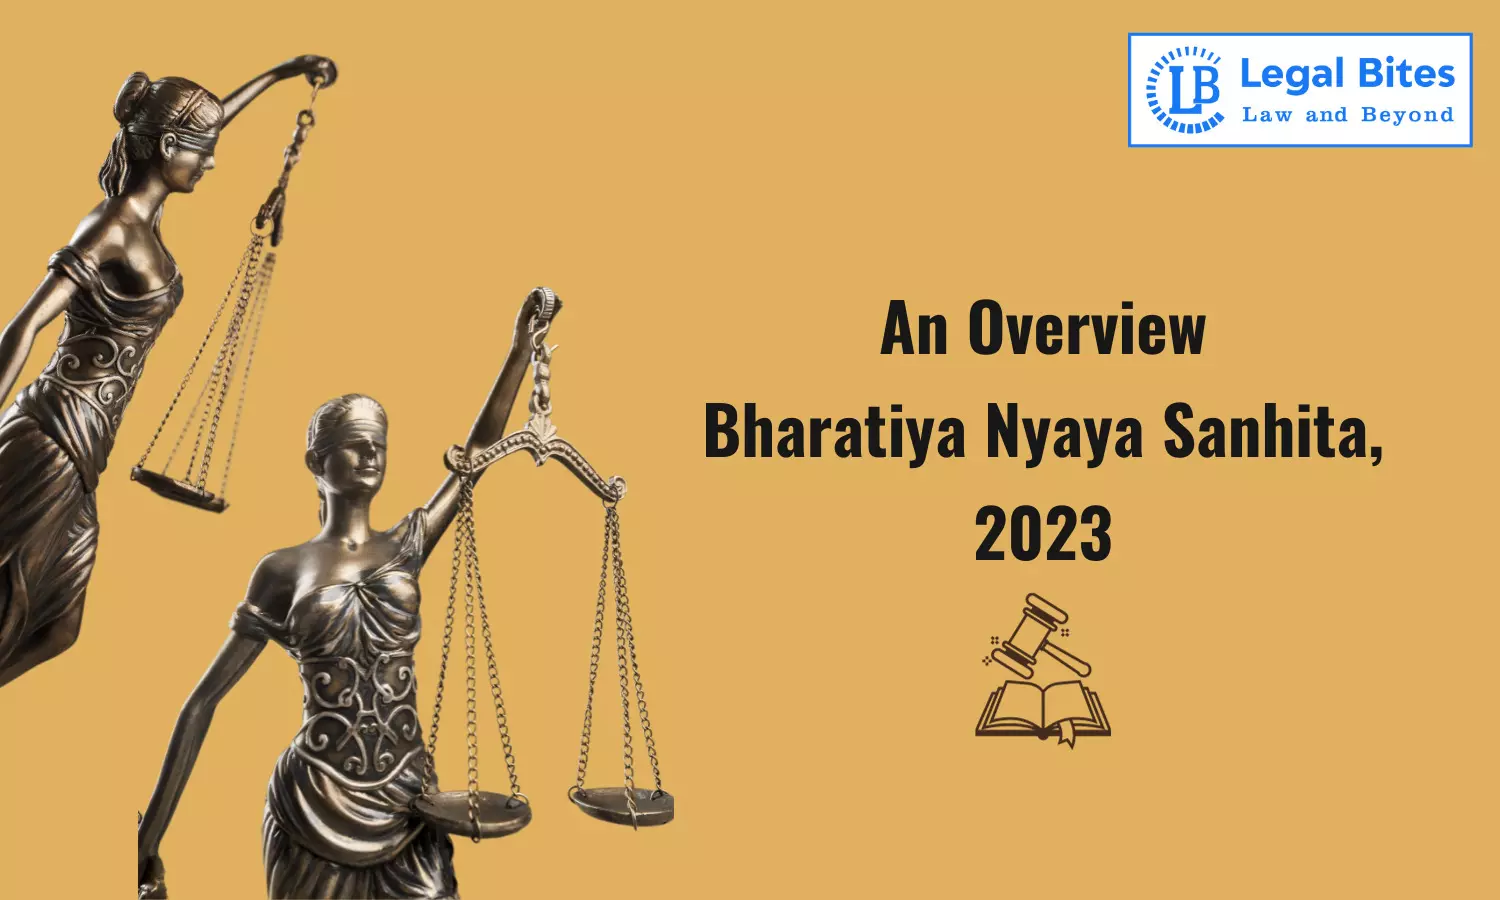 An Overview of the Bharatiya Nyaya Sanhita, 2023